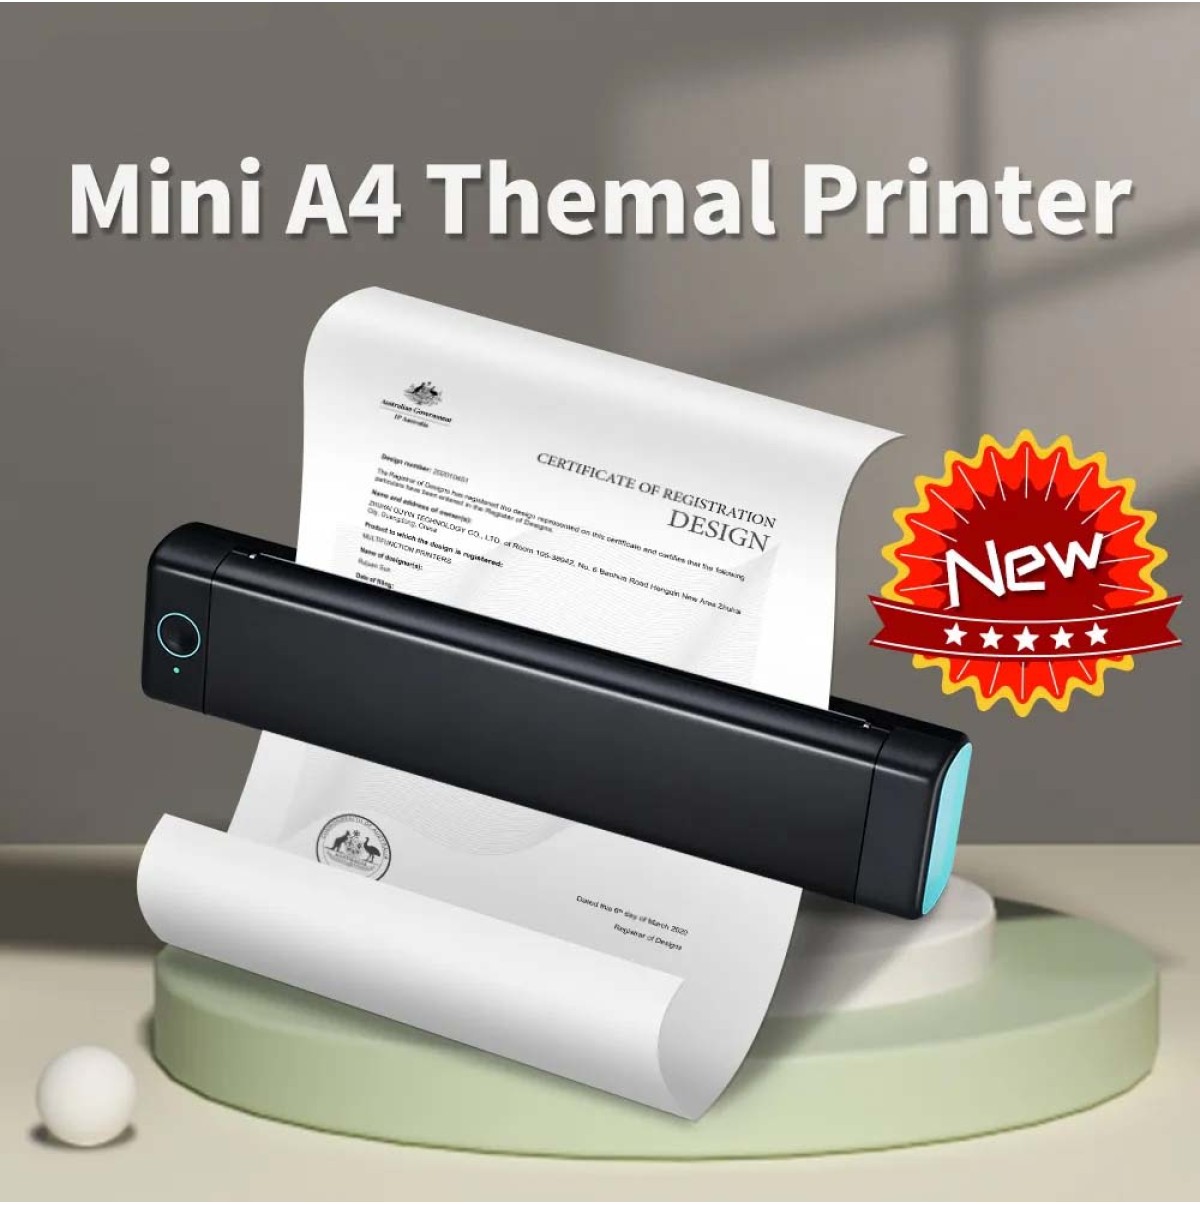 M08F A4 Portable Thermal Printer